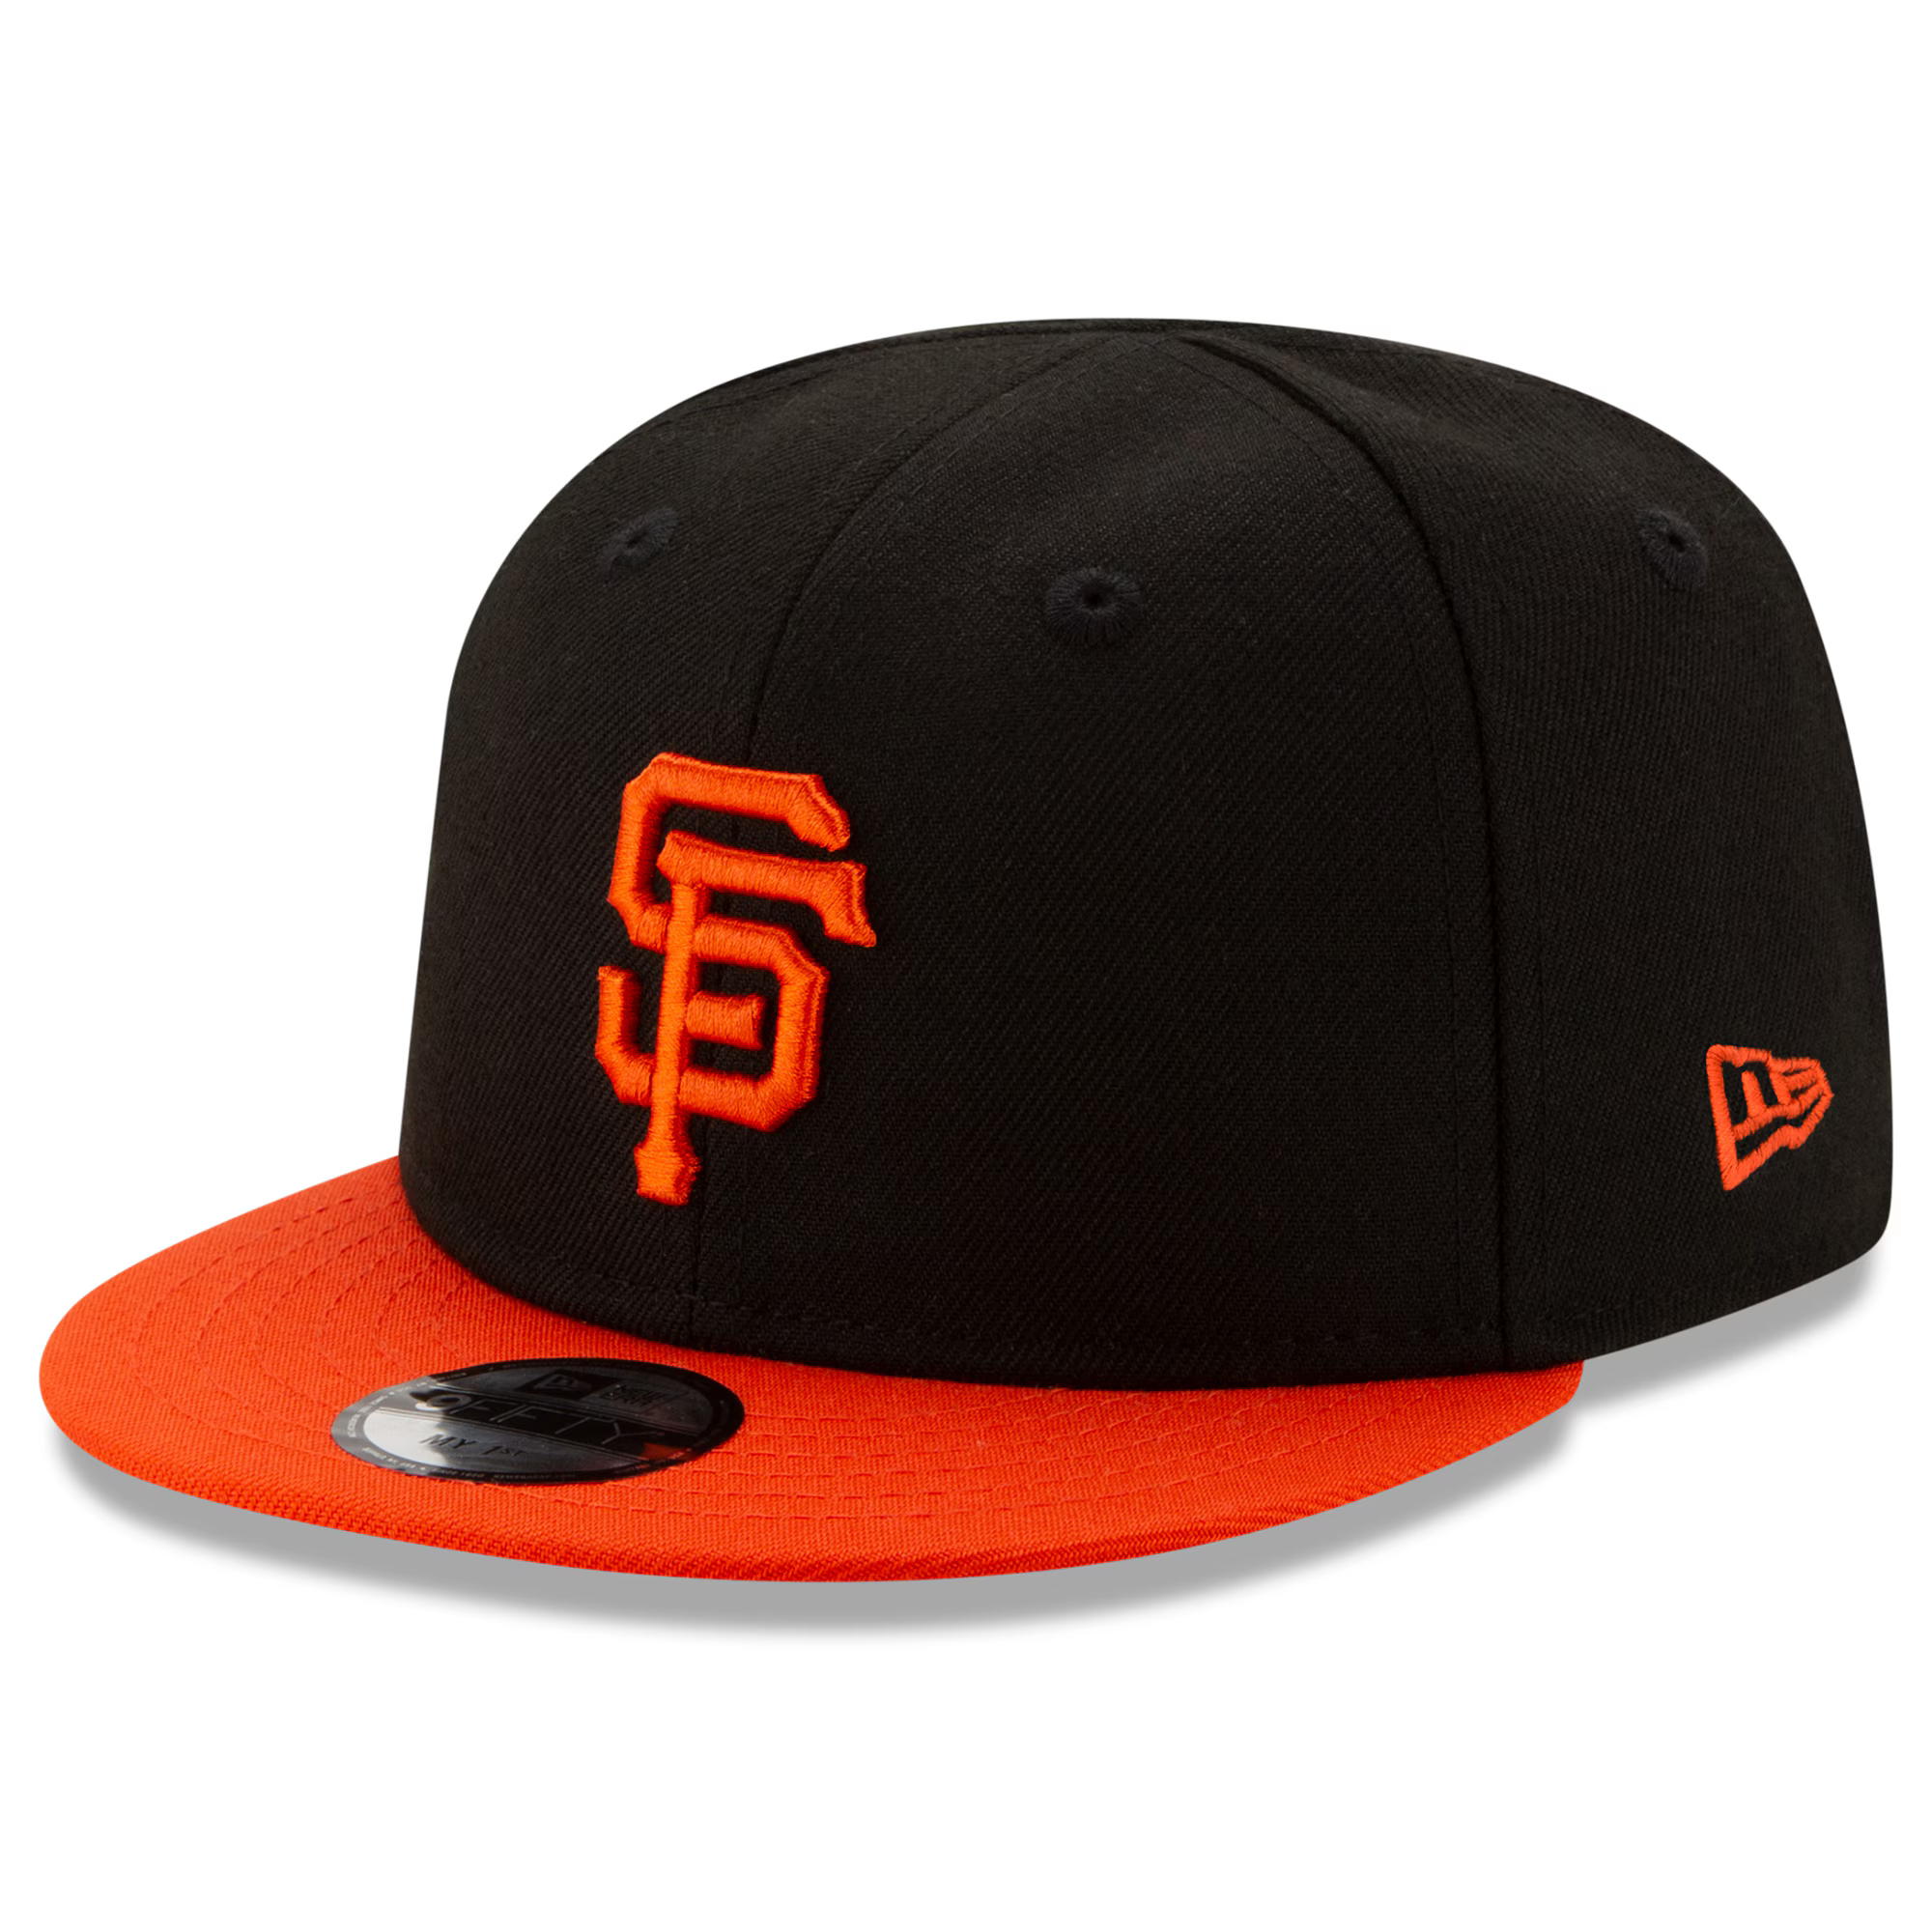 New Era Youth San Francisco Giants 9FIFTY Snapback Adjustable Hat